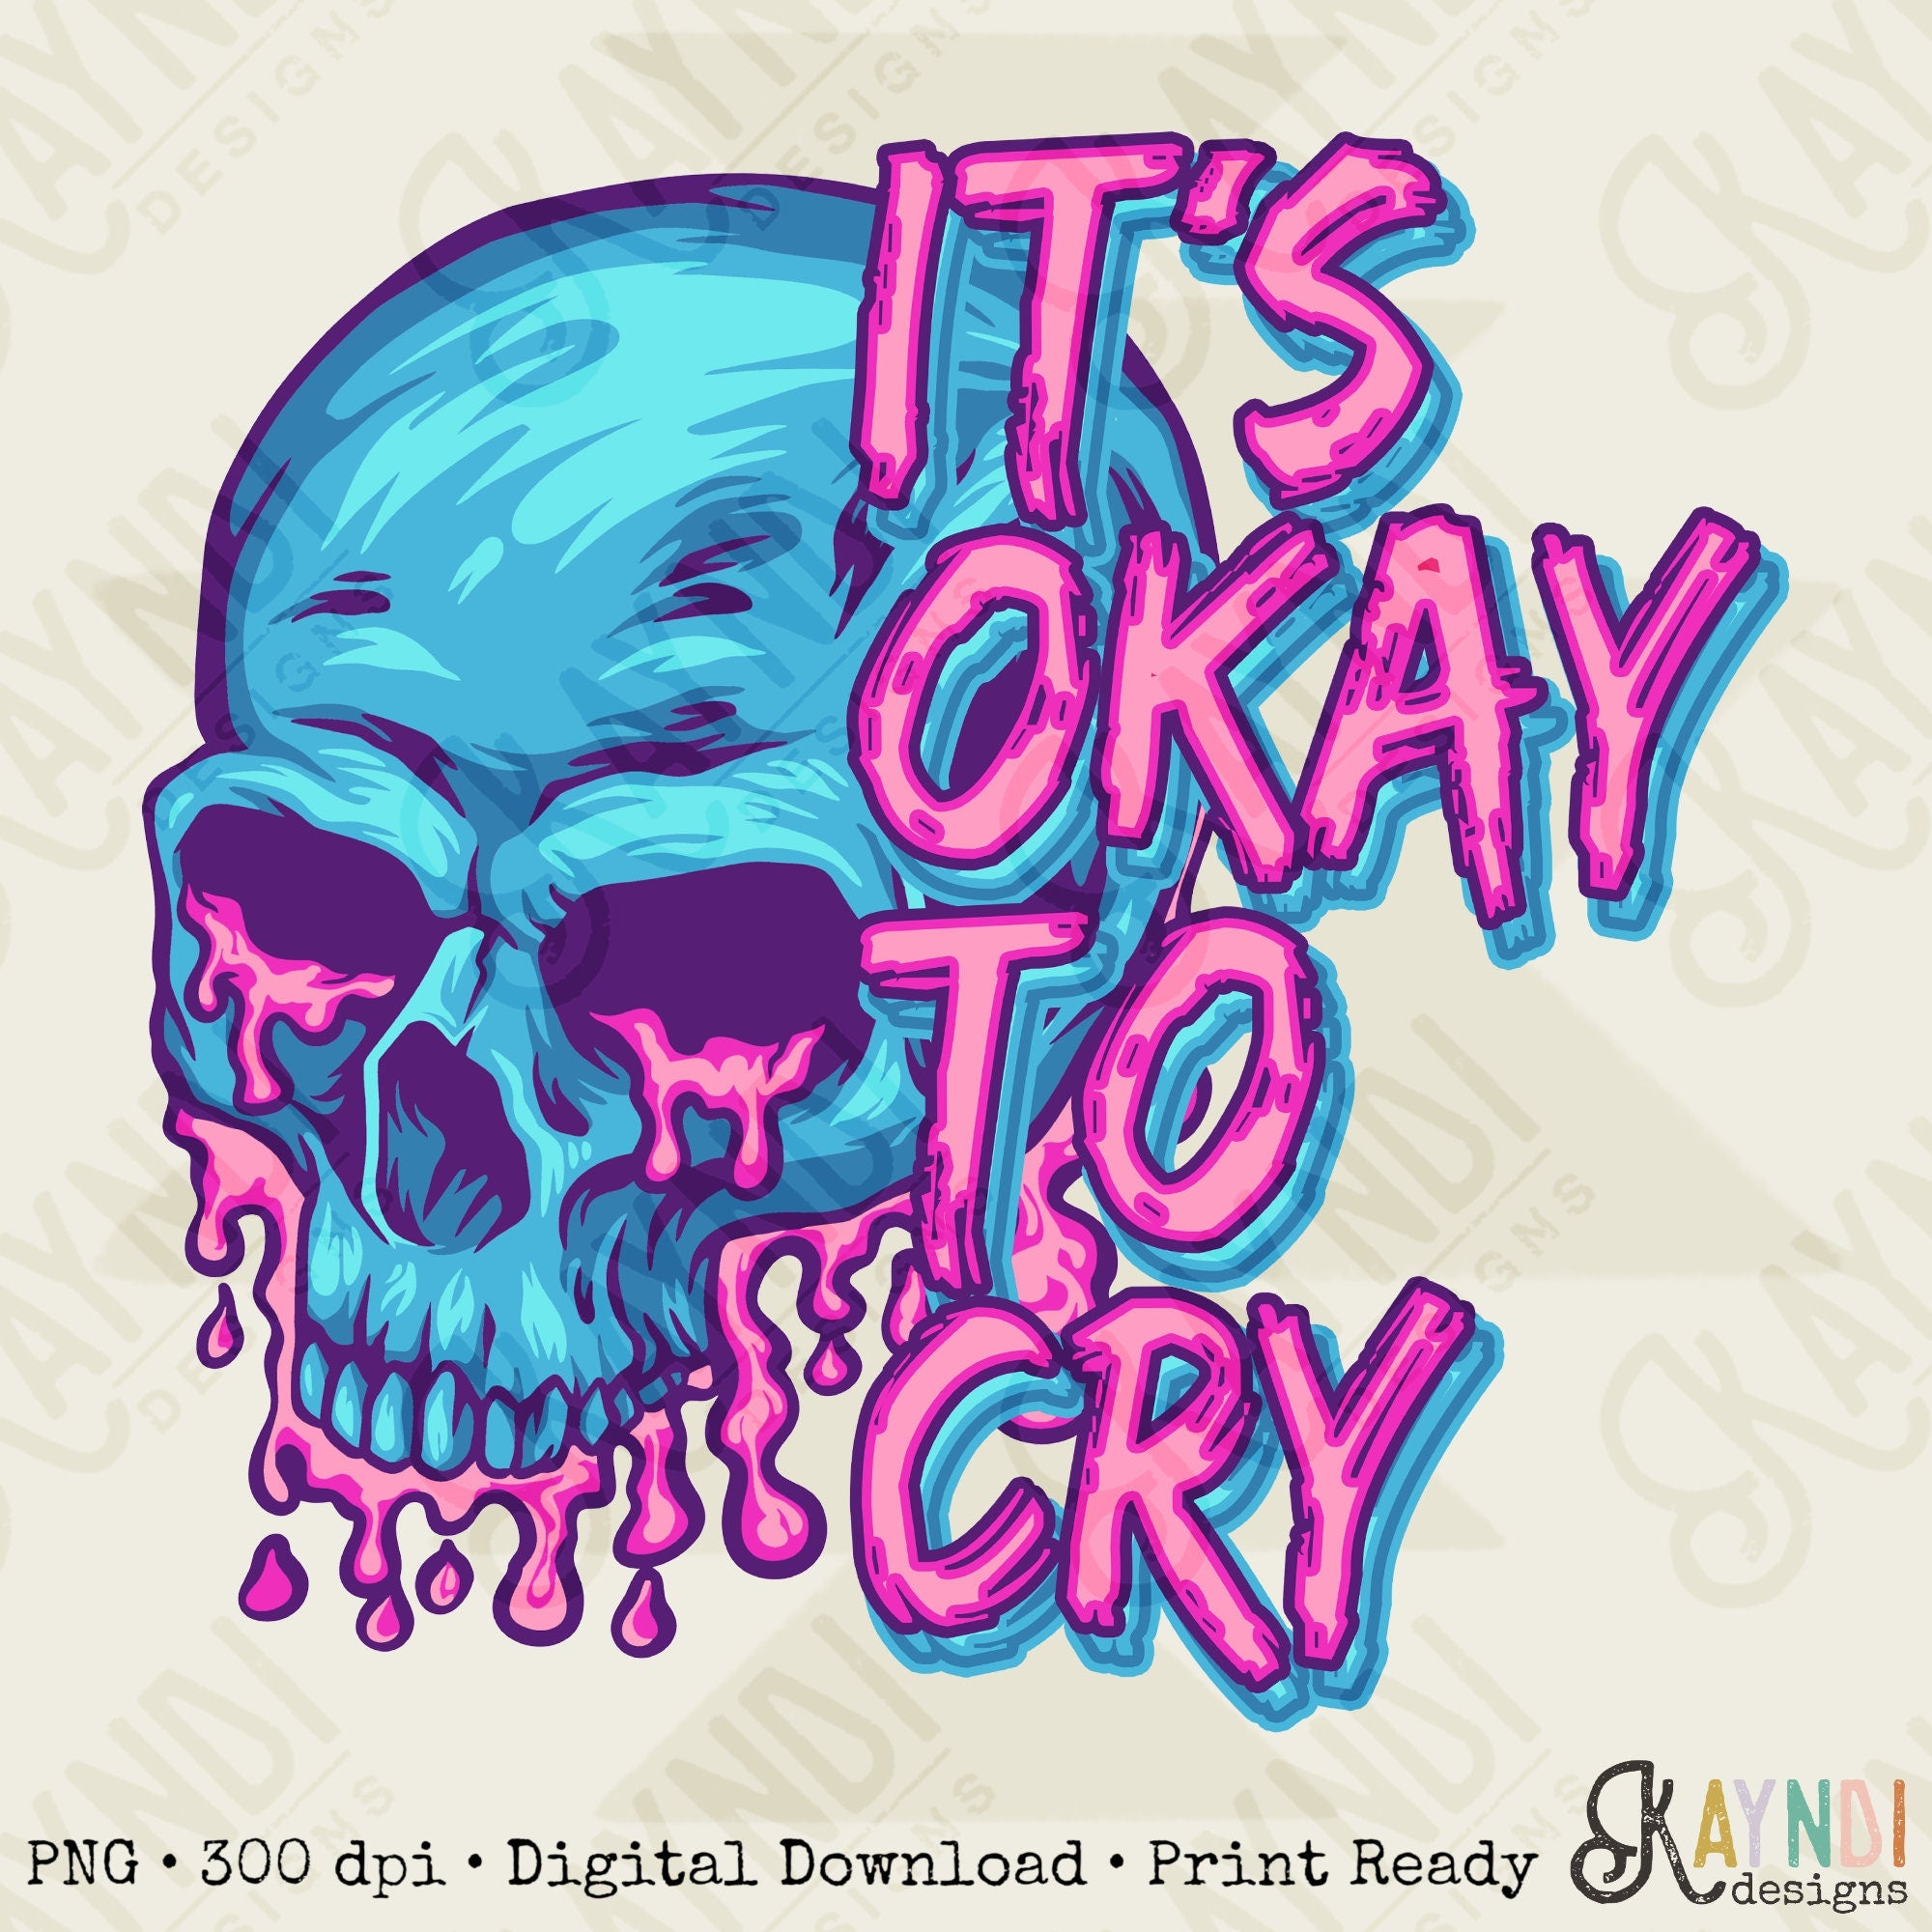 It's Okay to Cry Skellie Sublimation Design PNG Digital Download Printable Skeleton Skull Neon Grunge 90s Affirmation Good Vibes Rock Drip